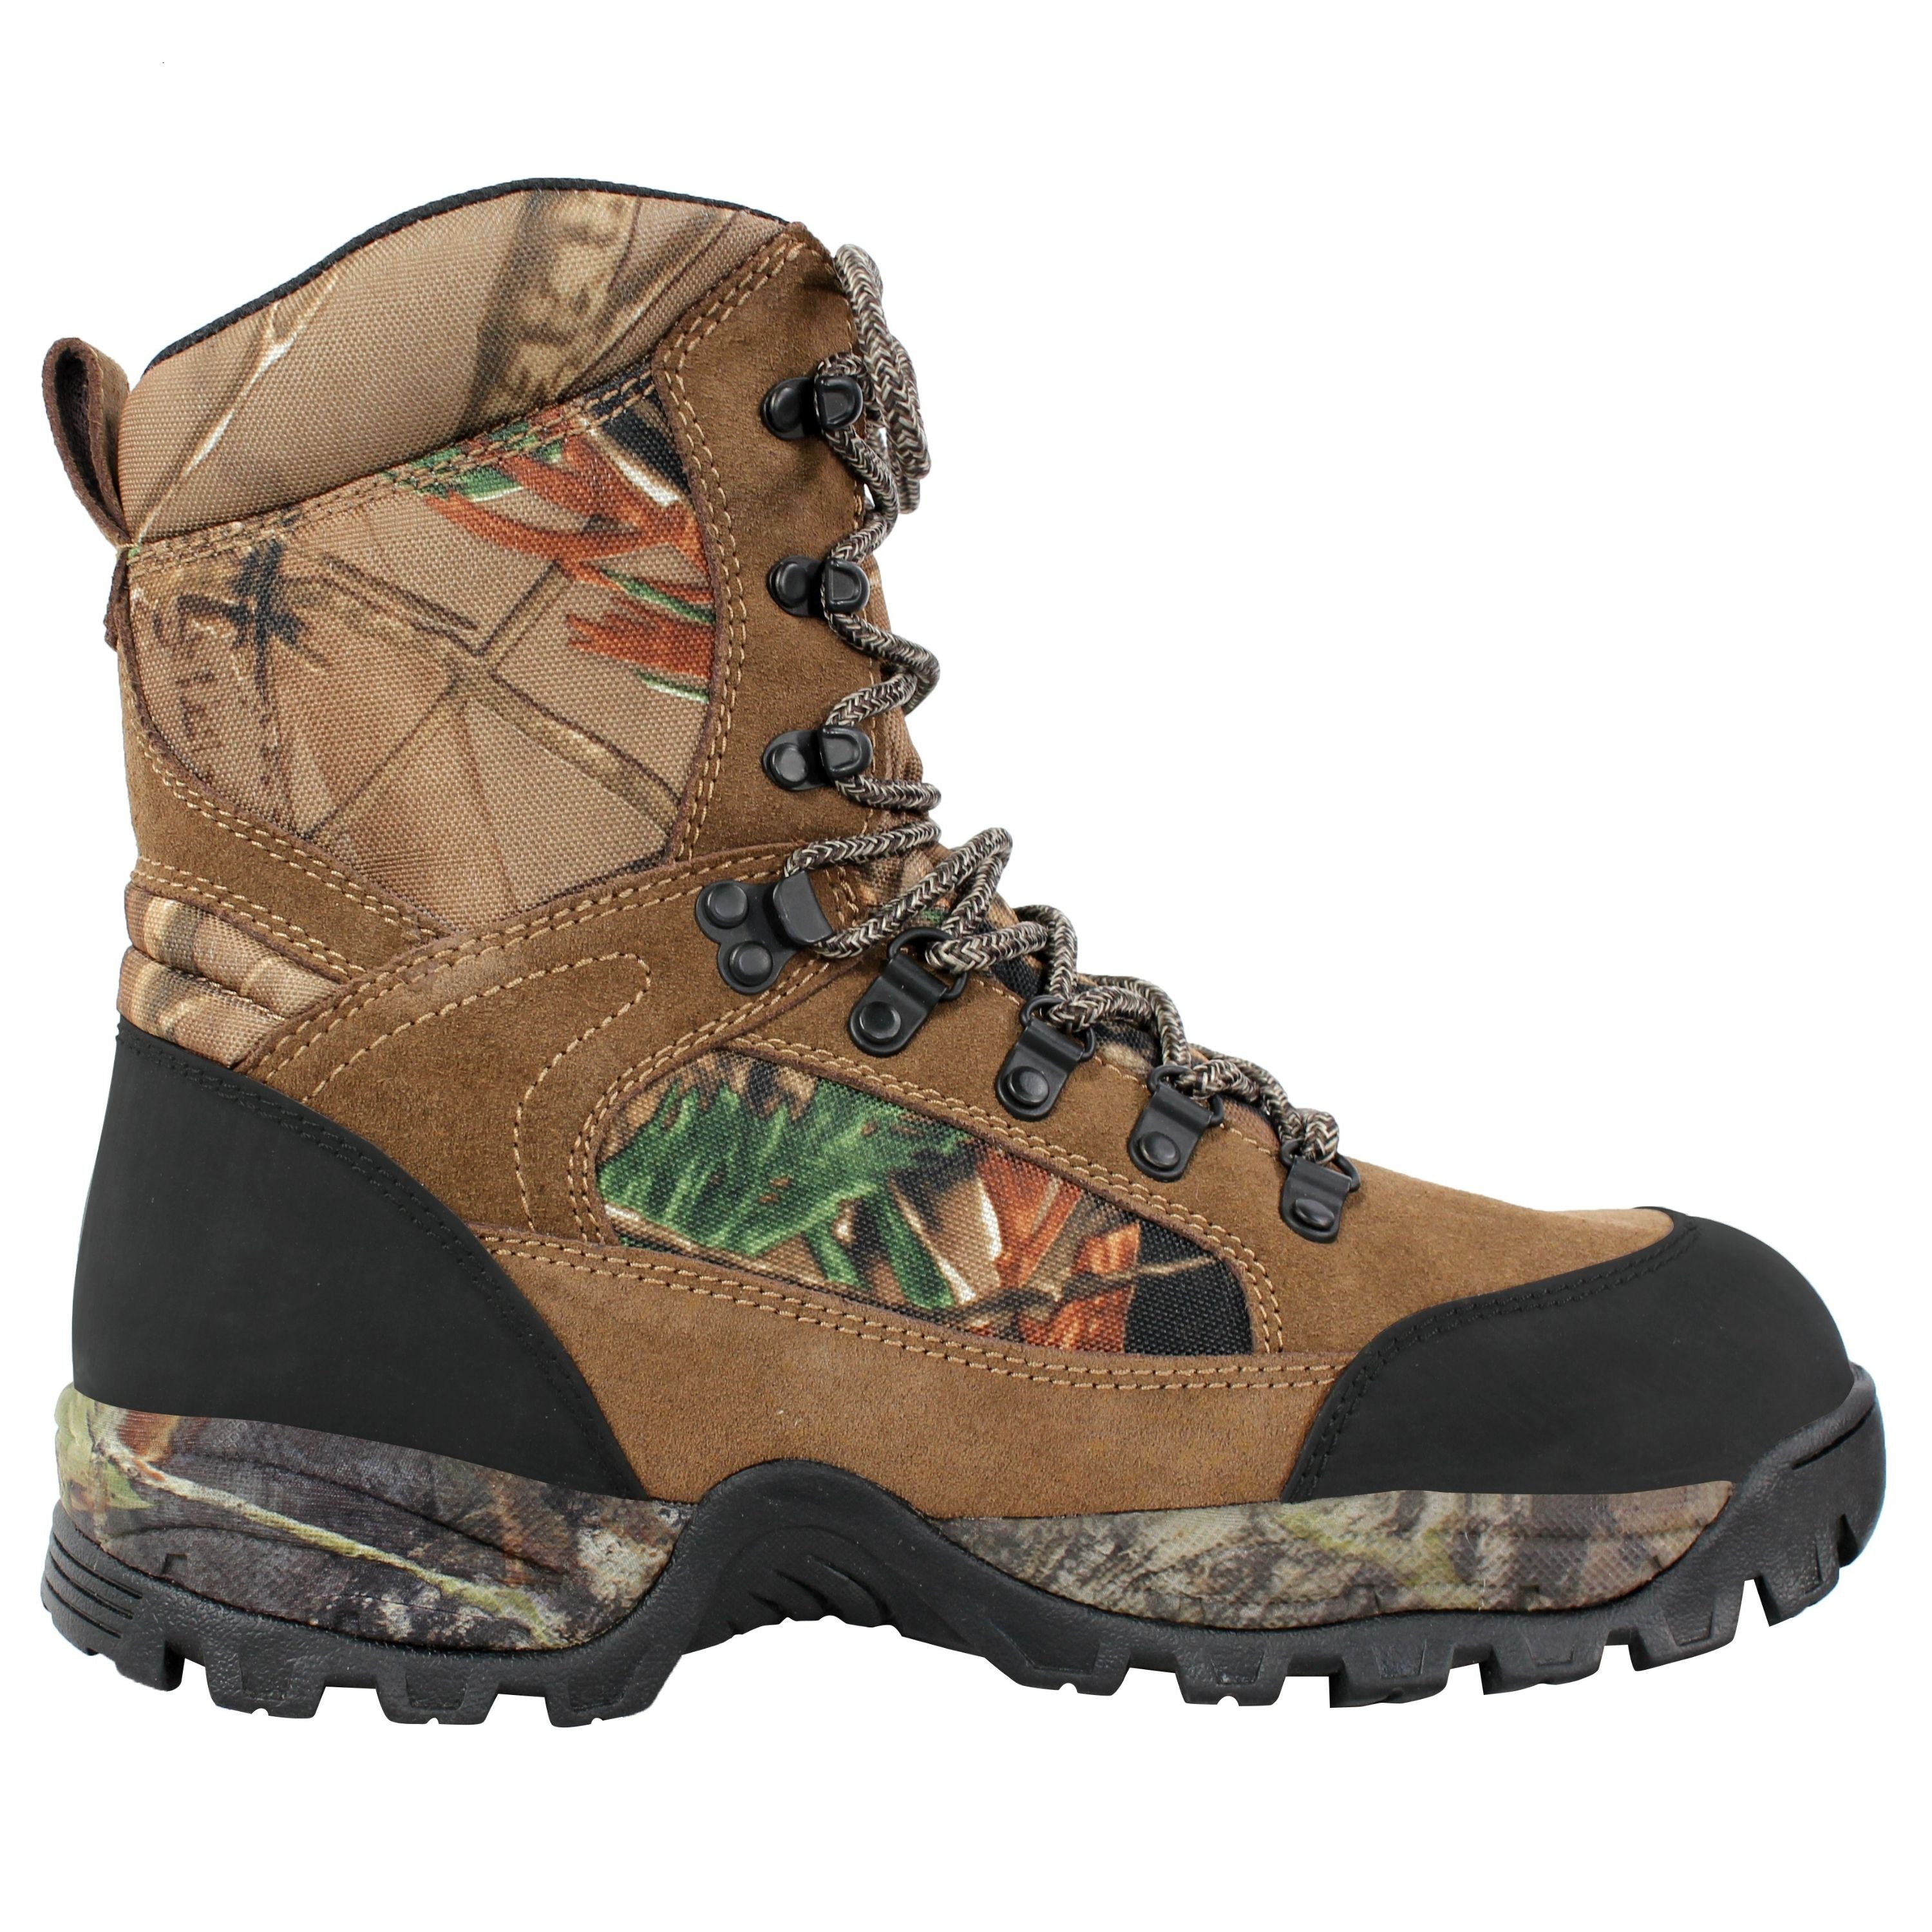 Camo access trail boots - Men's